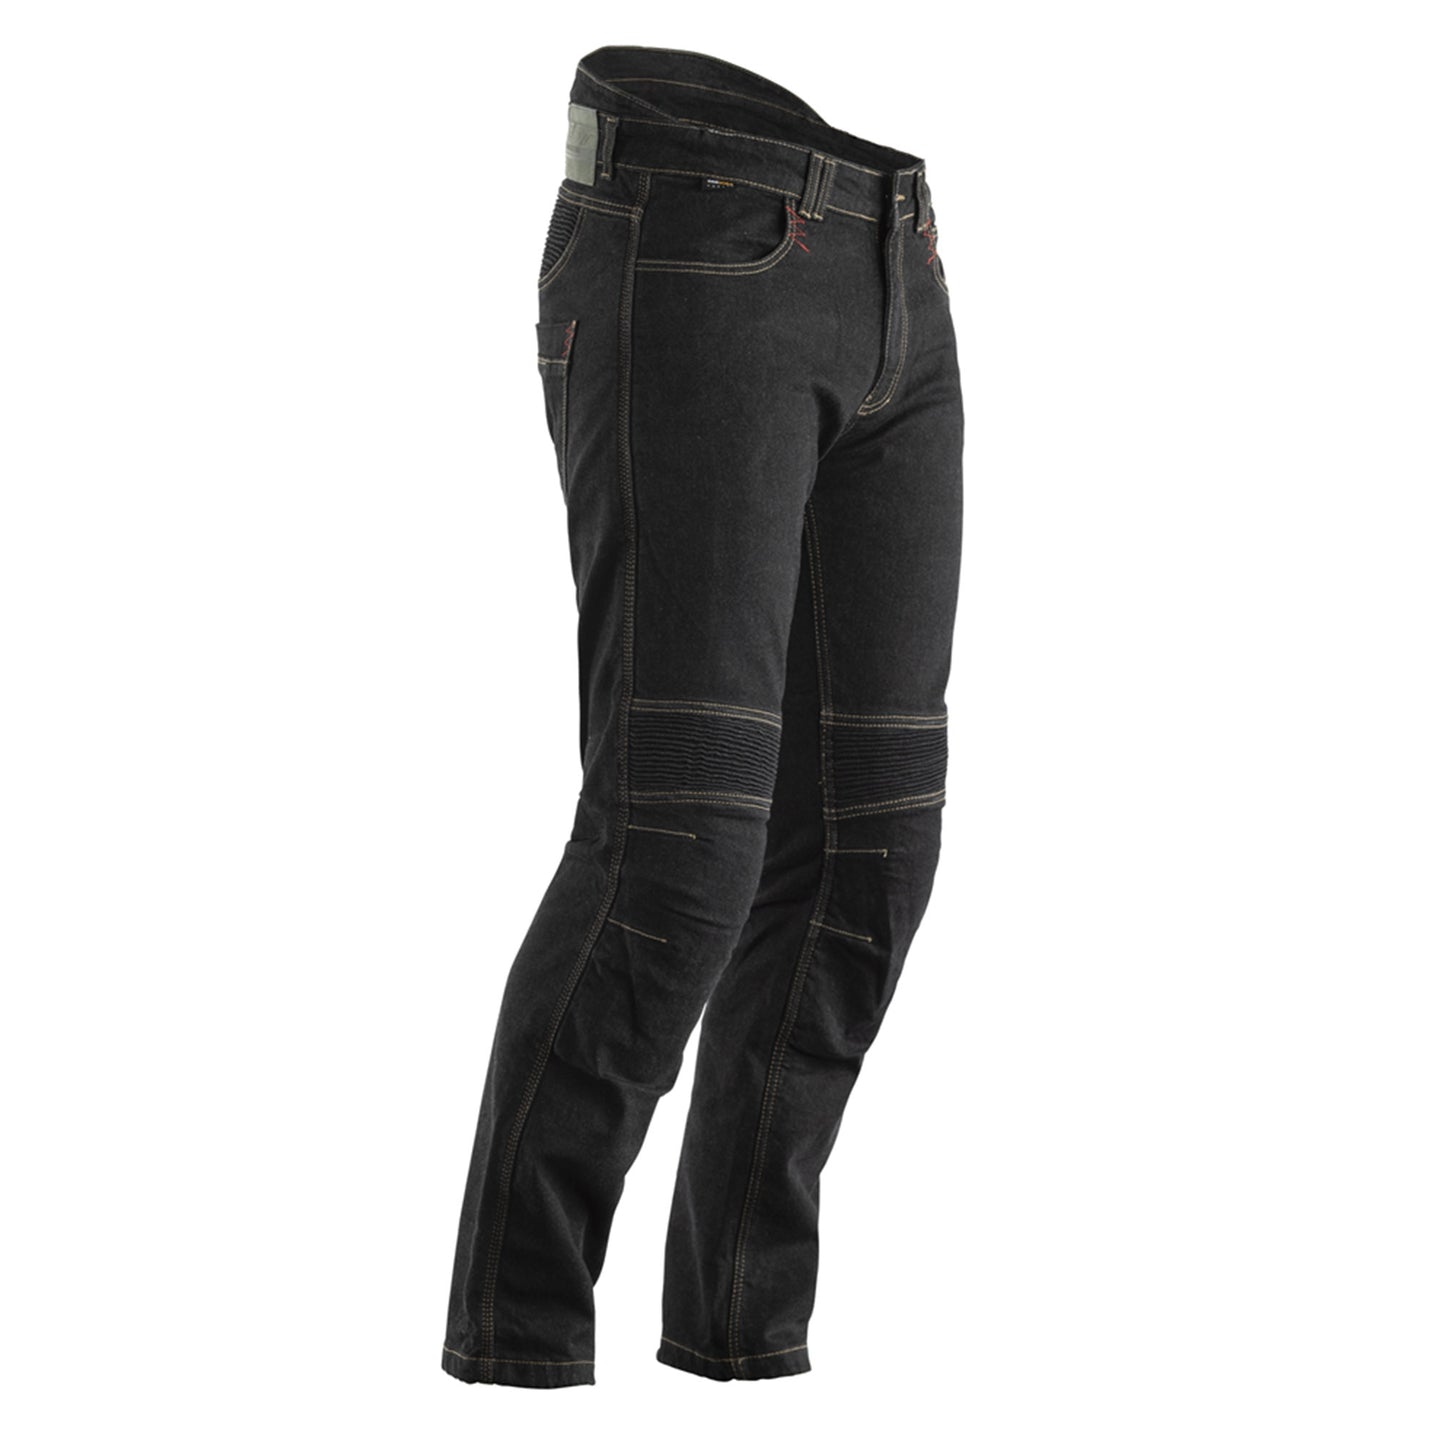 RST Reinforced Tech Pro CE Men's Denim Jeans - Includes Knee and Hip Armour - Regular Length  - Black